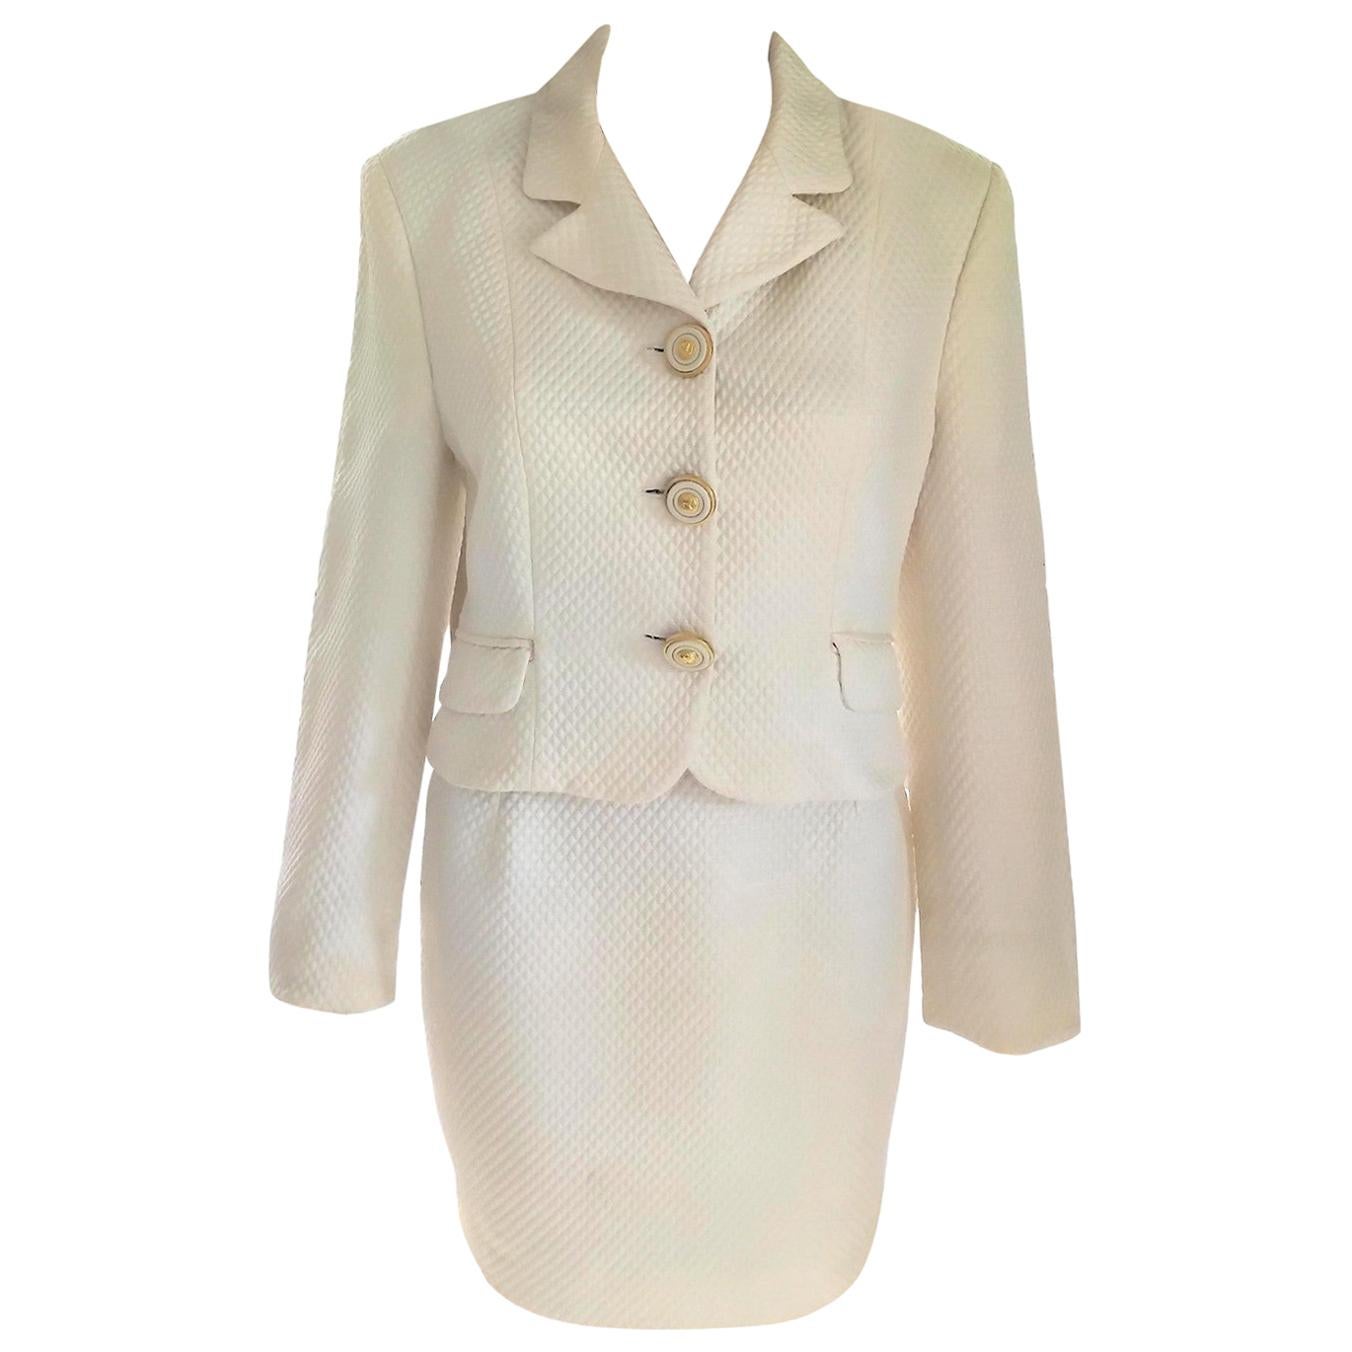 Gianni Versace Versus Cream & Crystal Diamond Jacket Skirt Suit IT 42/ US 4 6 For Sale